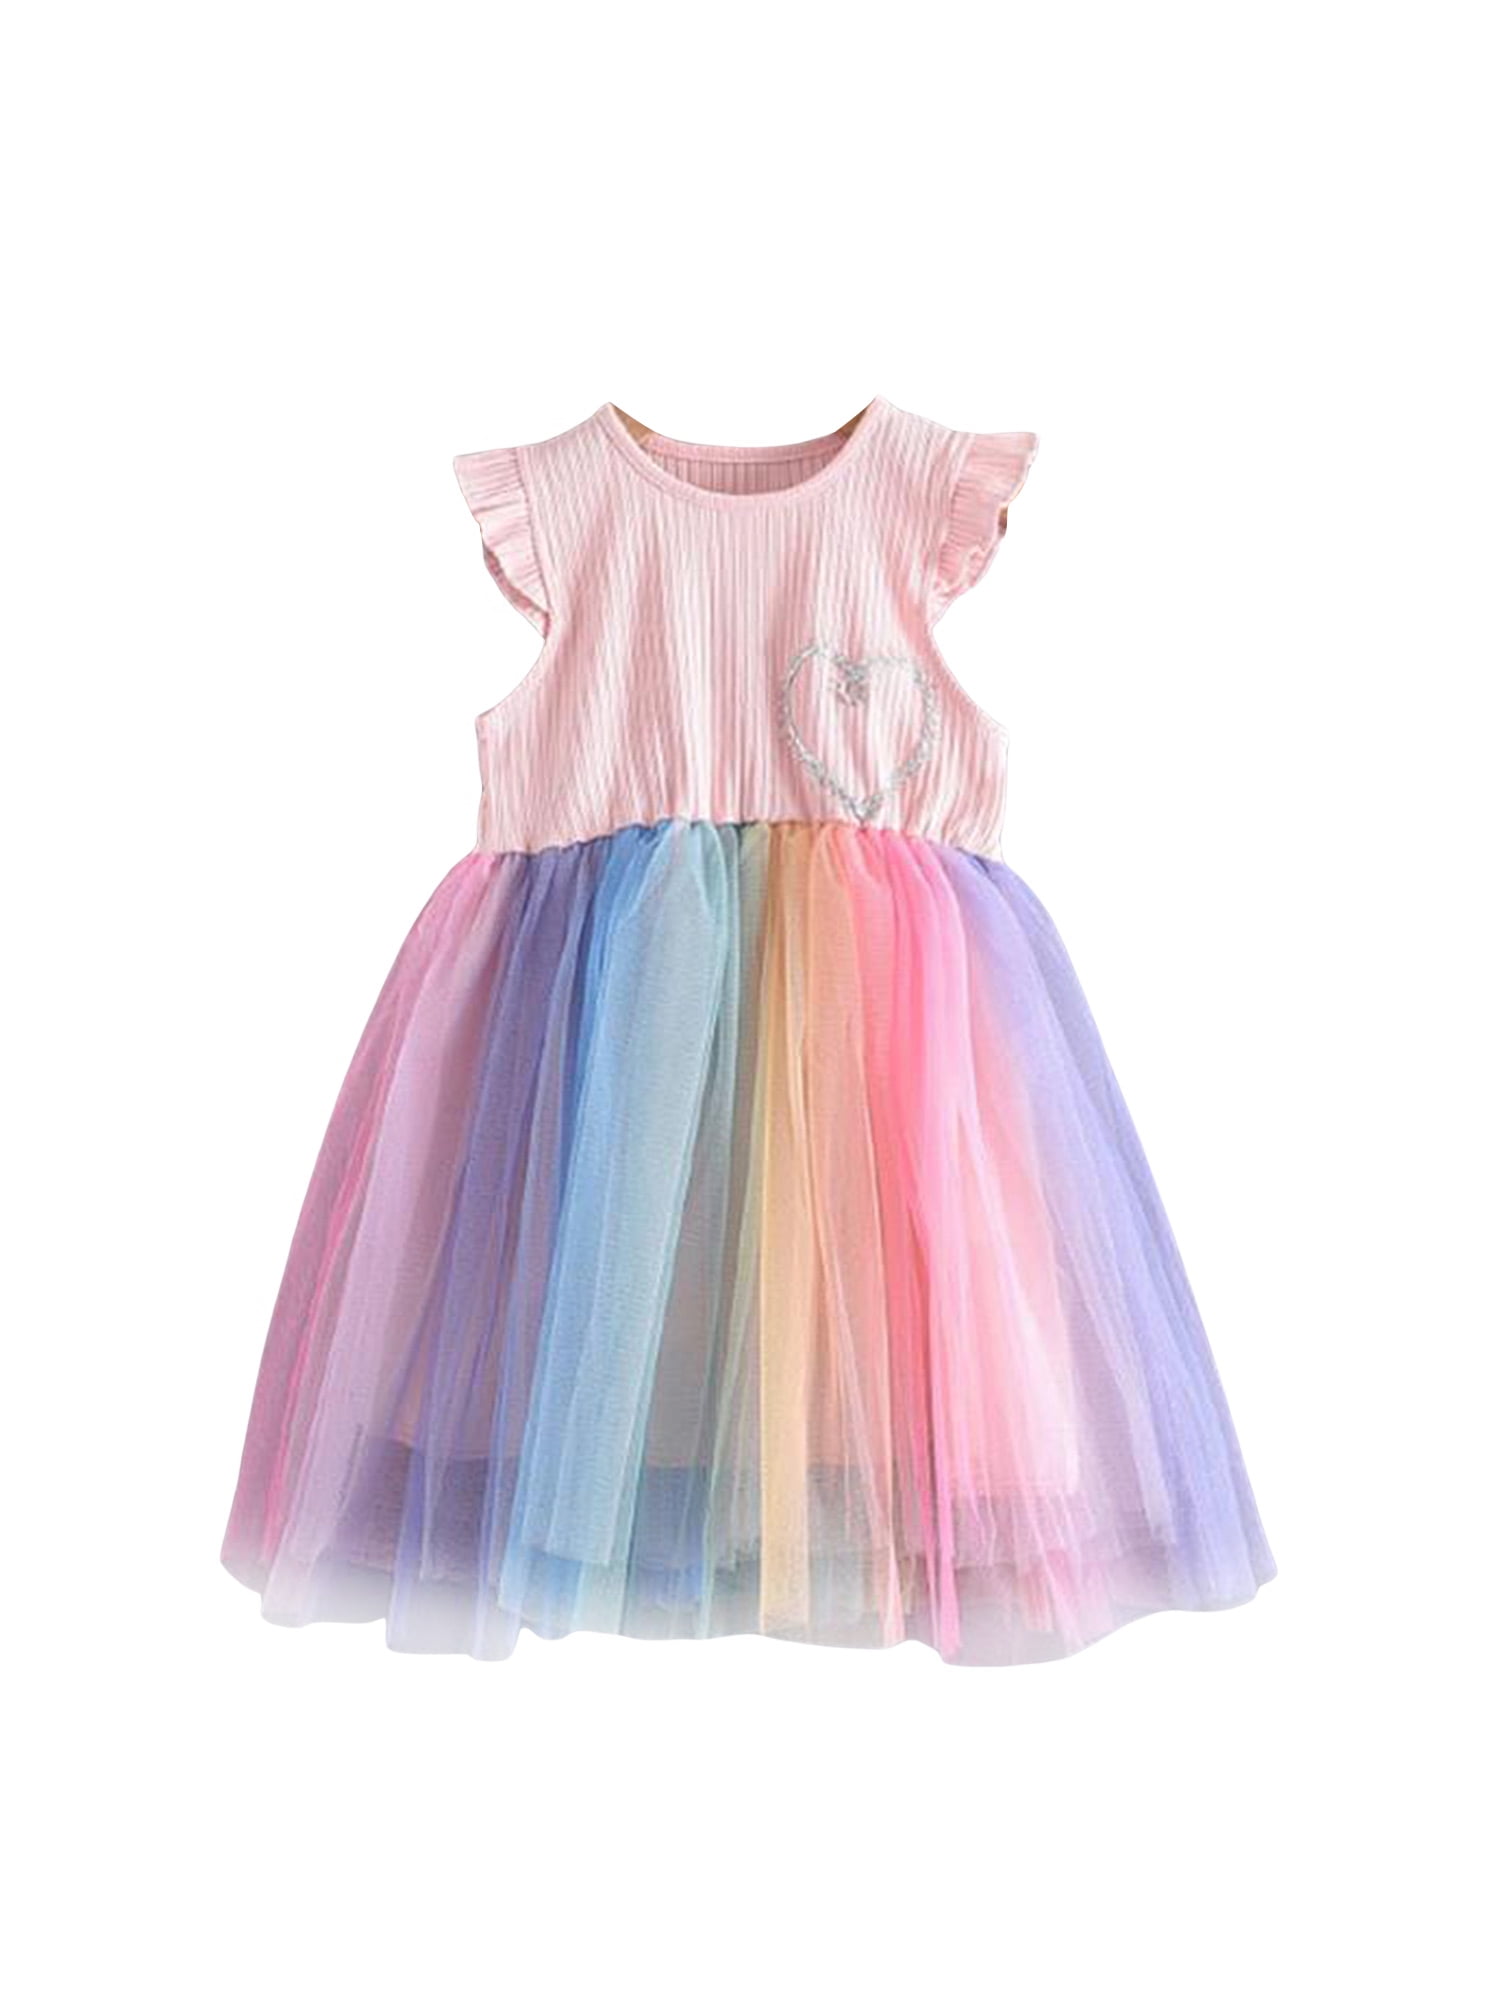 Toddler Baby Girls Tutu Dress Sleeveless Tulle Skirts Dress Princess Dress Sundress 